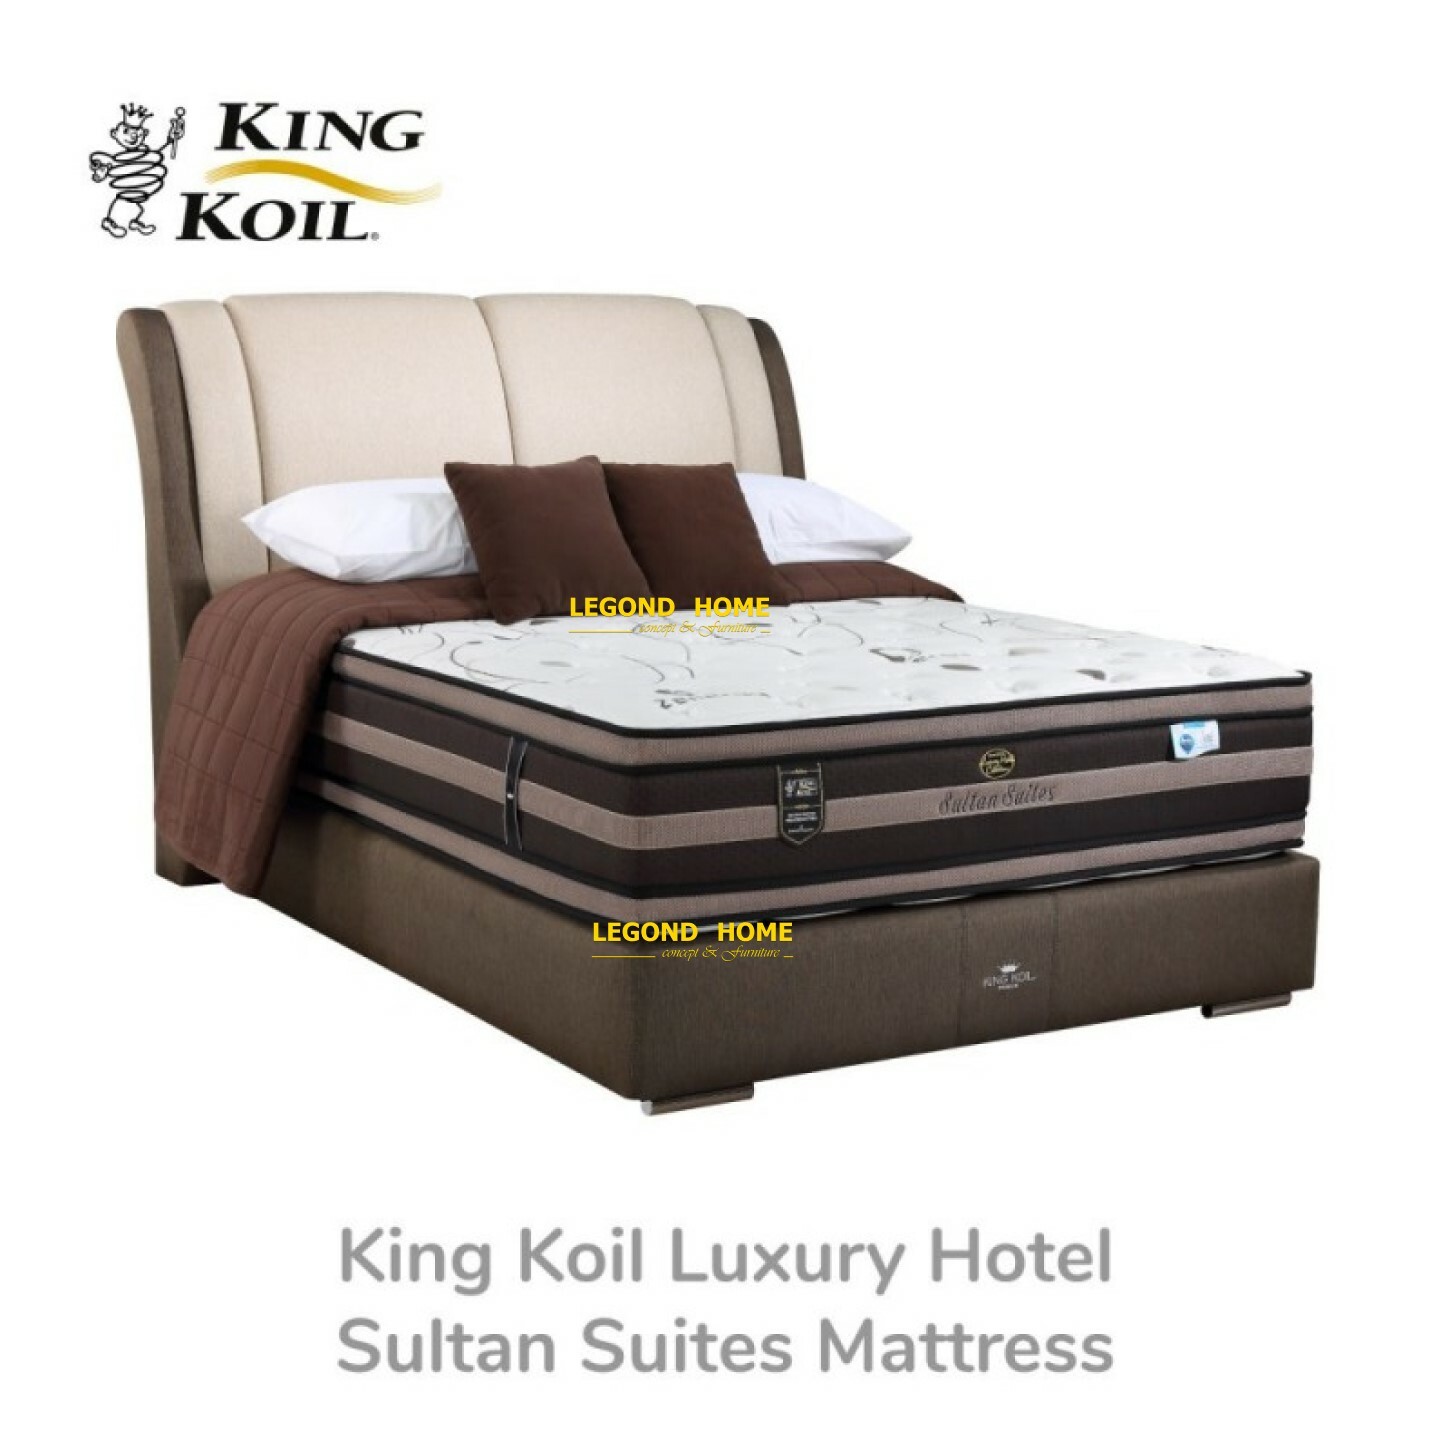 King-Koil-Luxury-Hotel-Sultan-Suites-Mattress.jpg